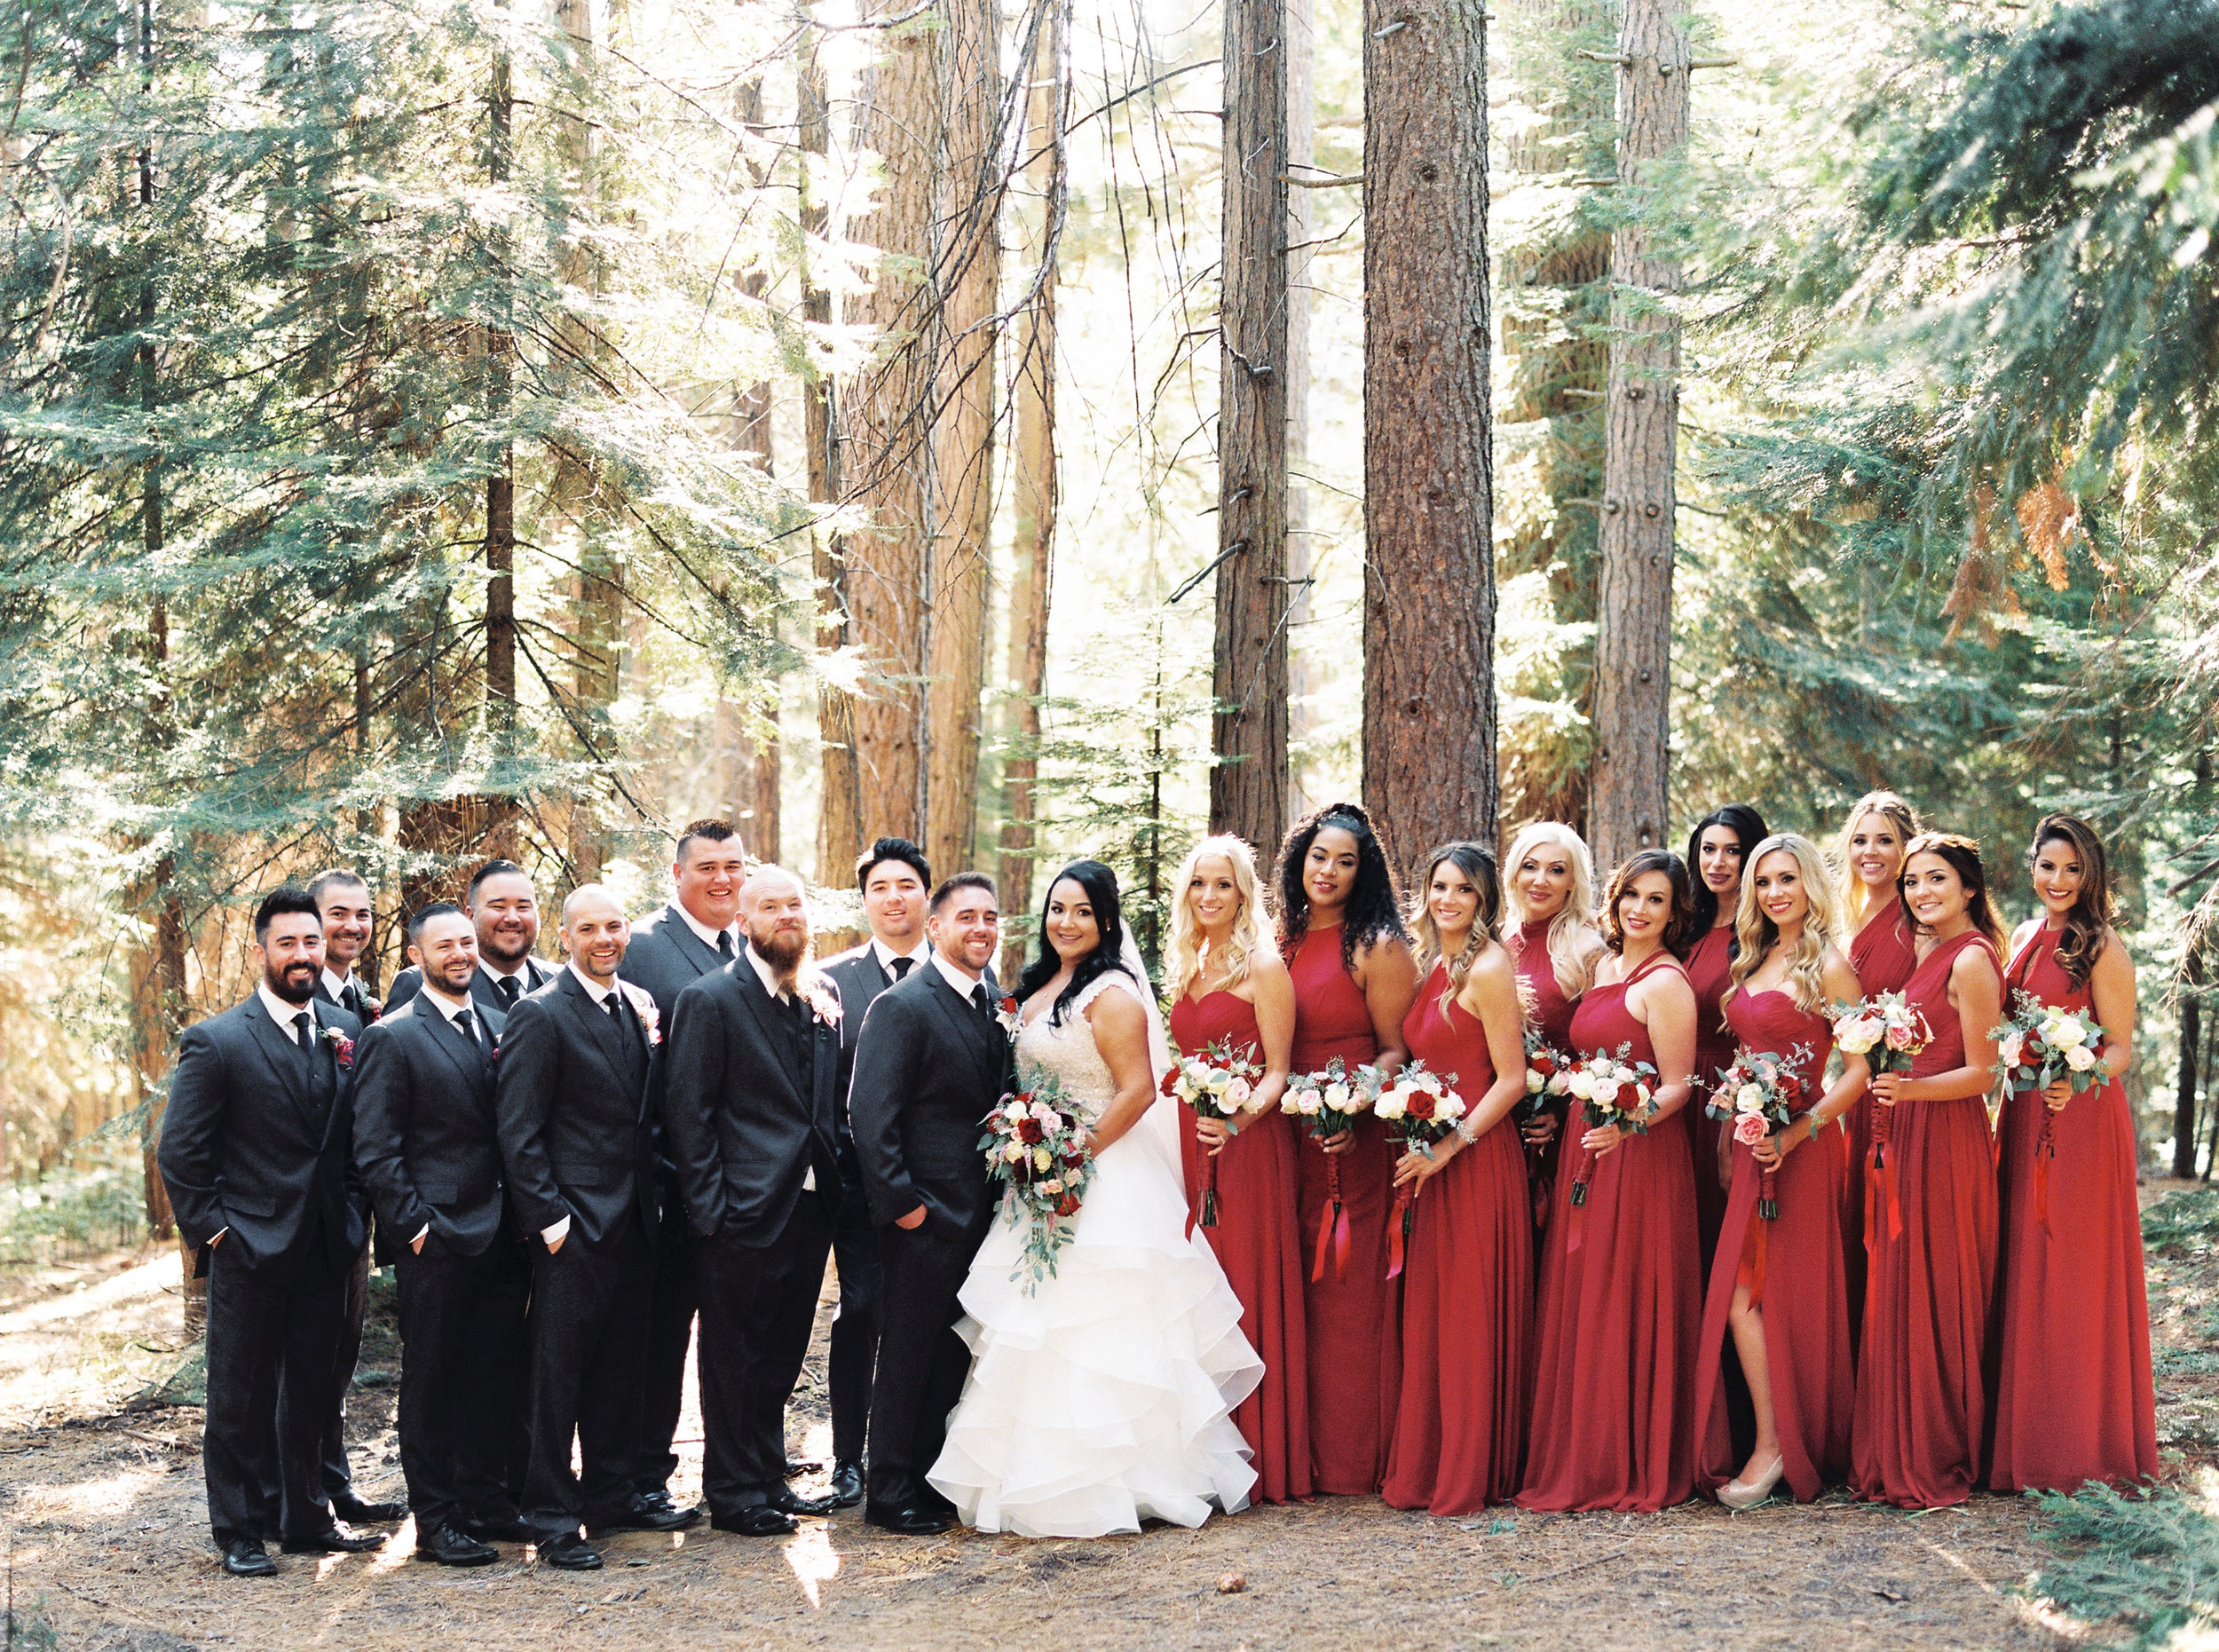 Tenaya-lodge-wedding-at-yosemite-national-park-california-93.jpg